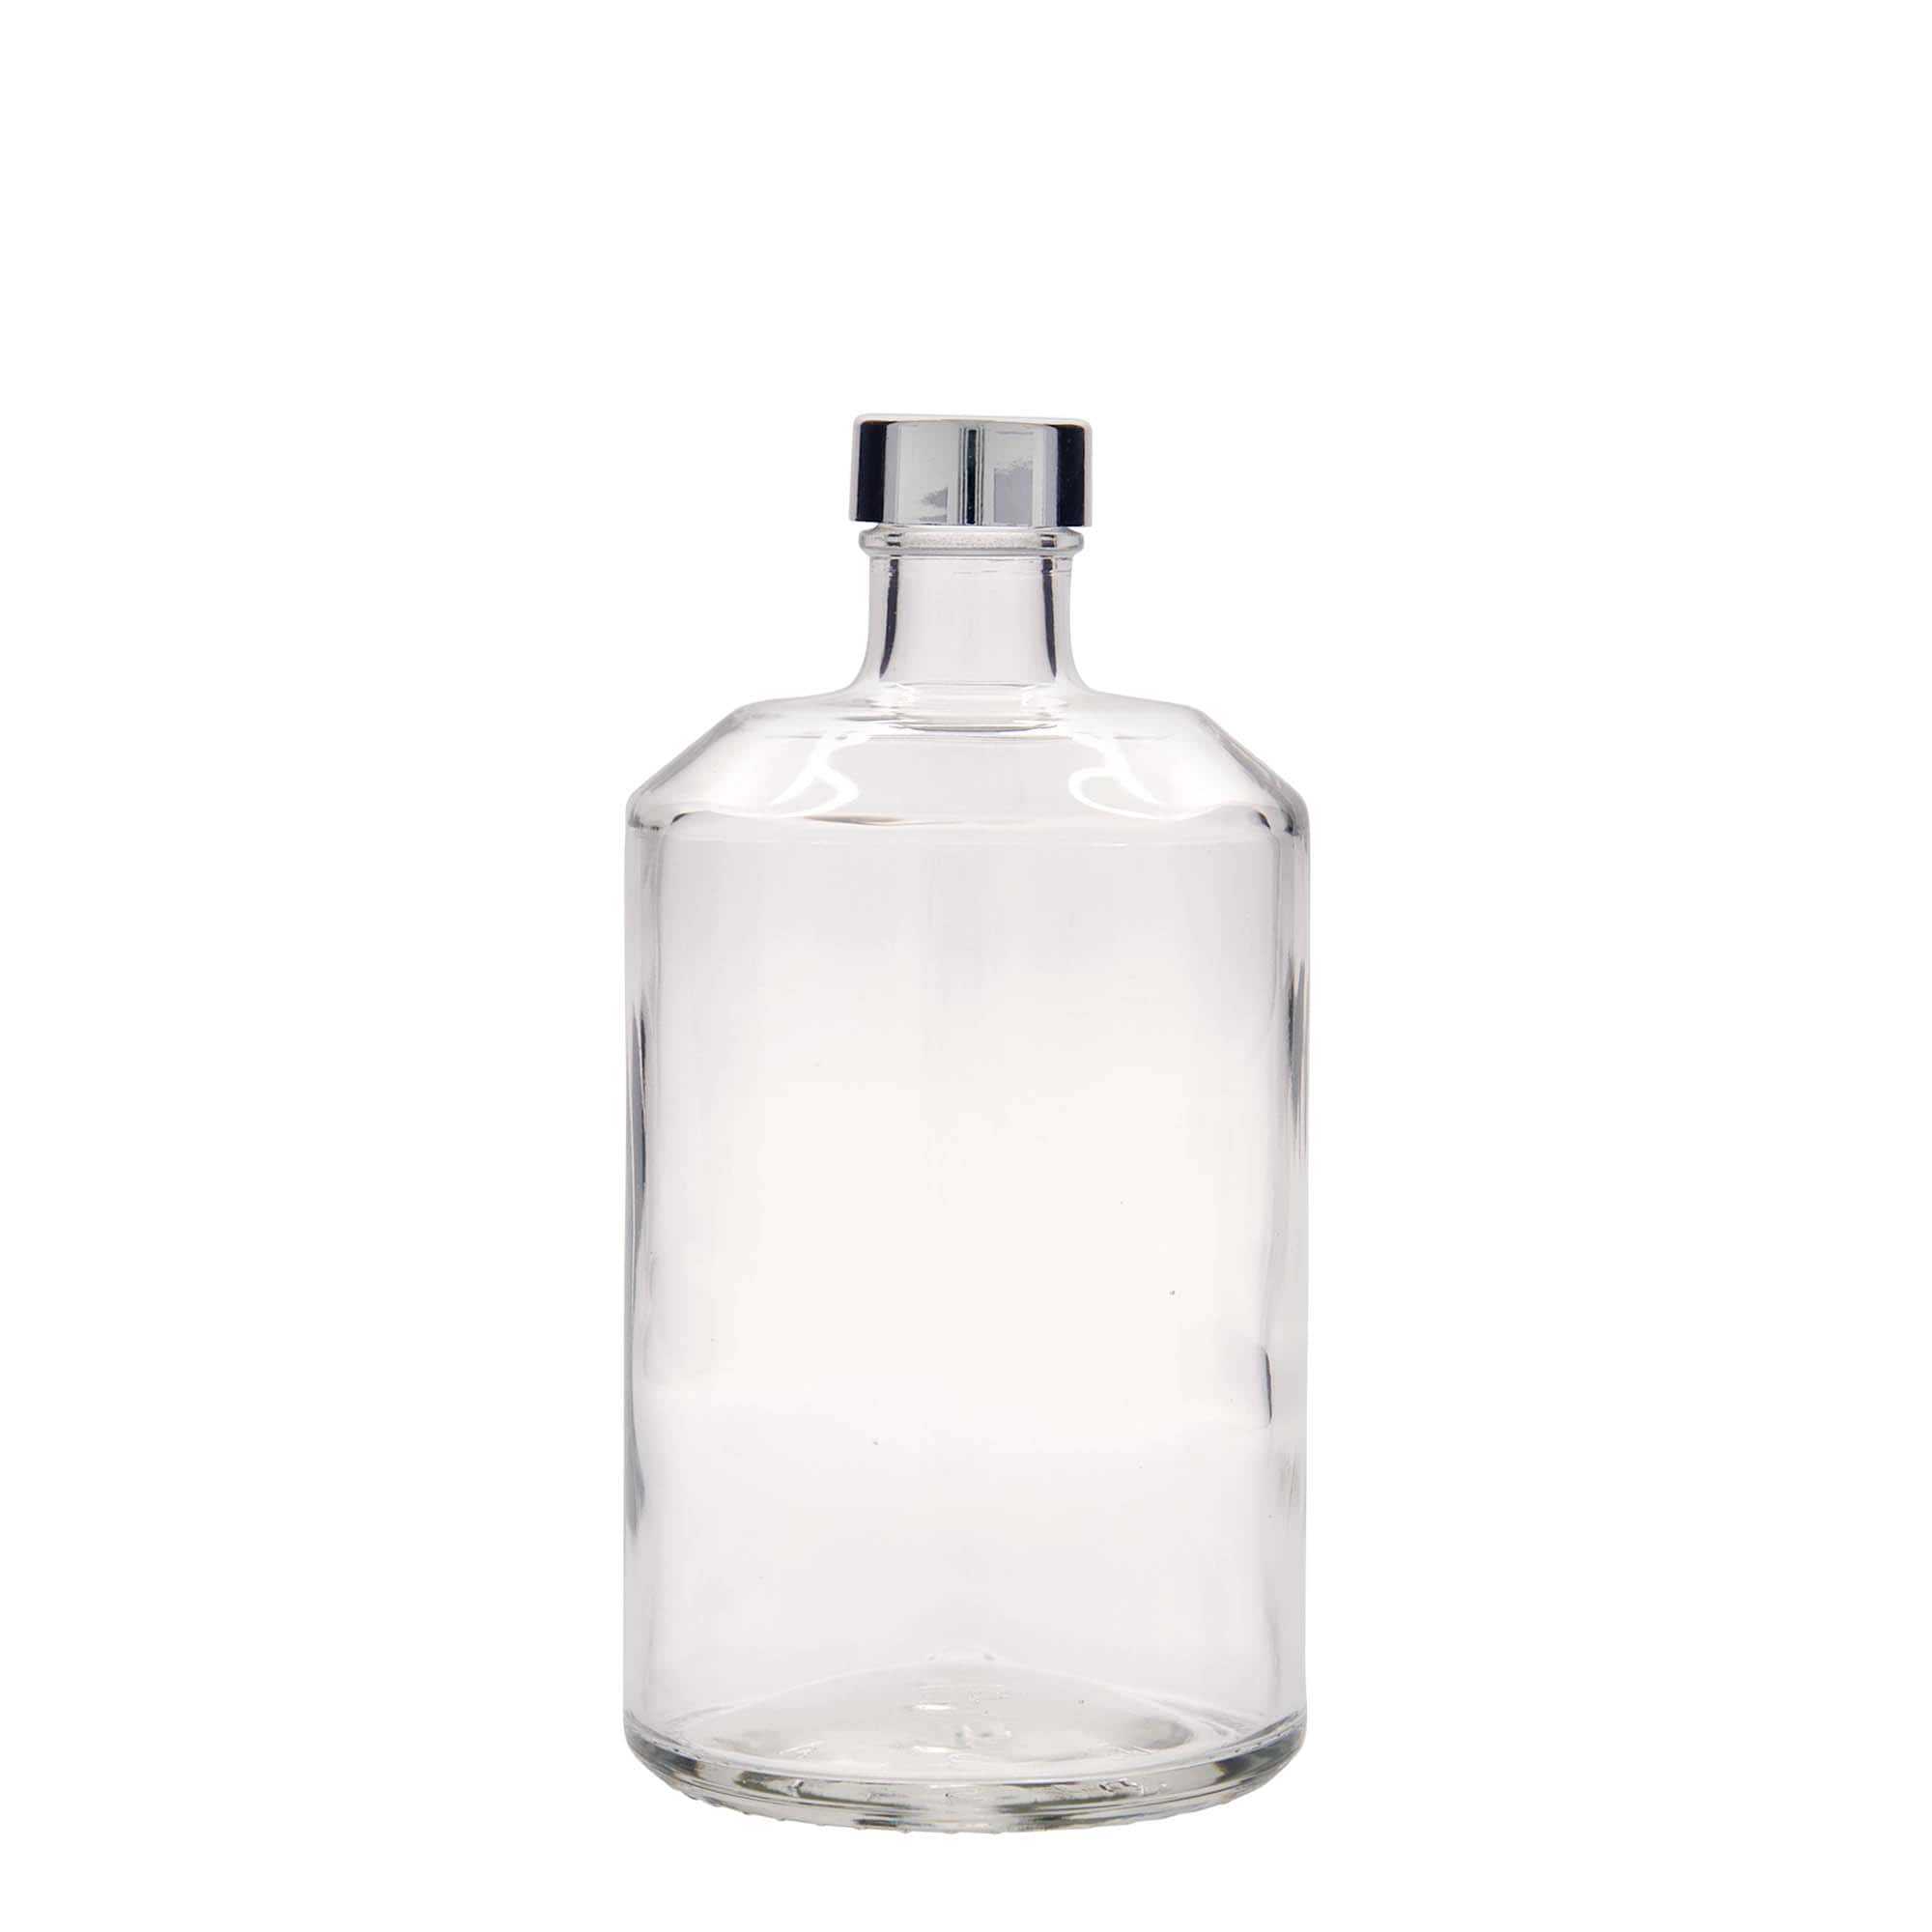 700 ml glass bottle 'Hella', closure: GPI 28